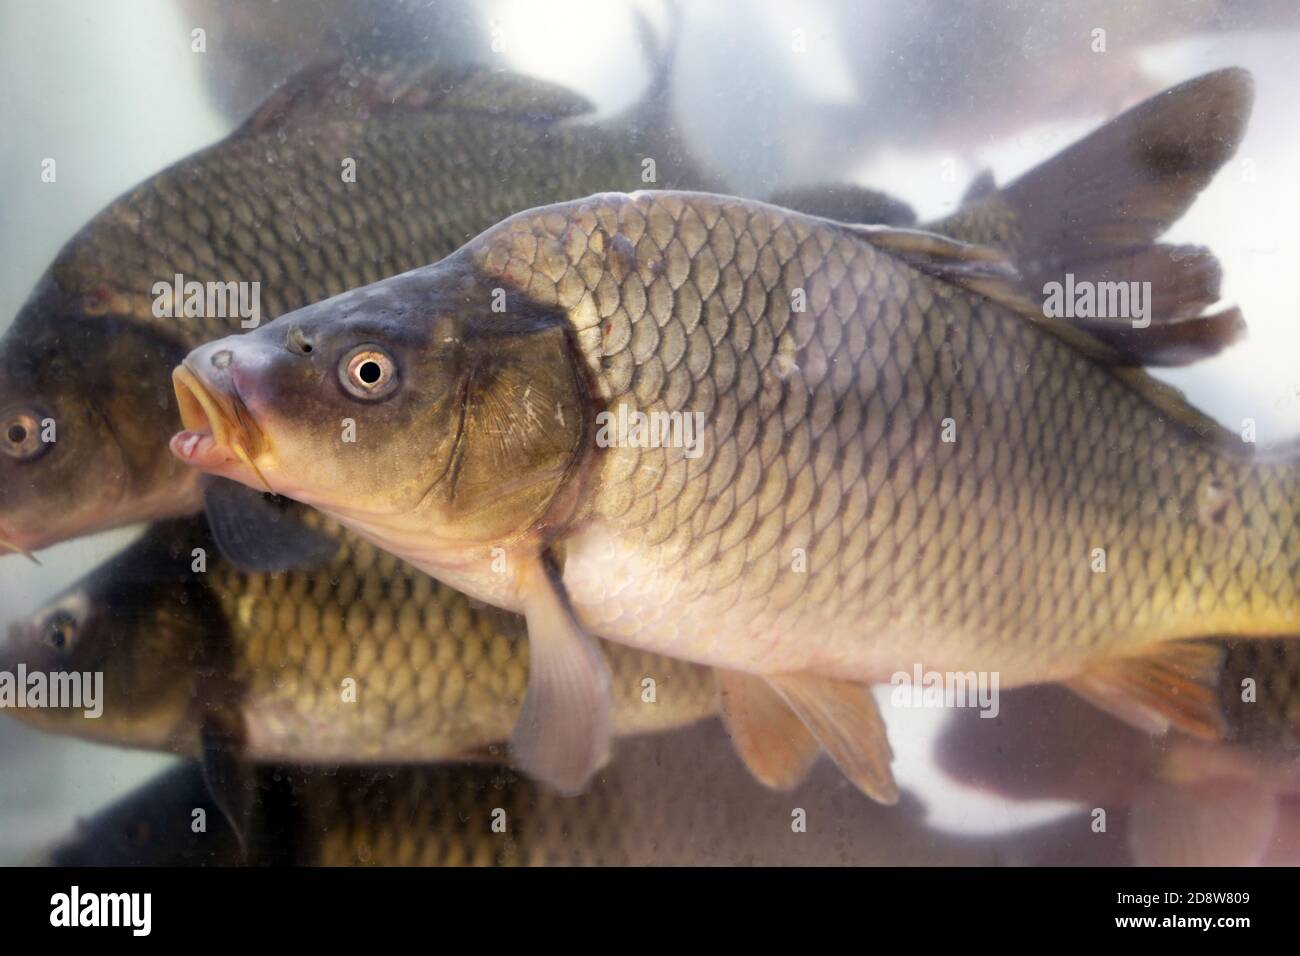 https://c8.alamy.com/comp/2D8W809/carps-swimming-in-aquarium-water-view-through-the-glass-fish-breeding-freshwater-carp-cyprinus-carpio-2D8W809.jpg